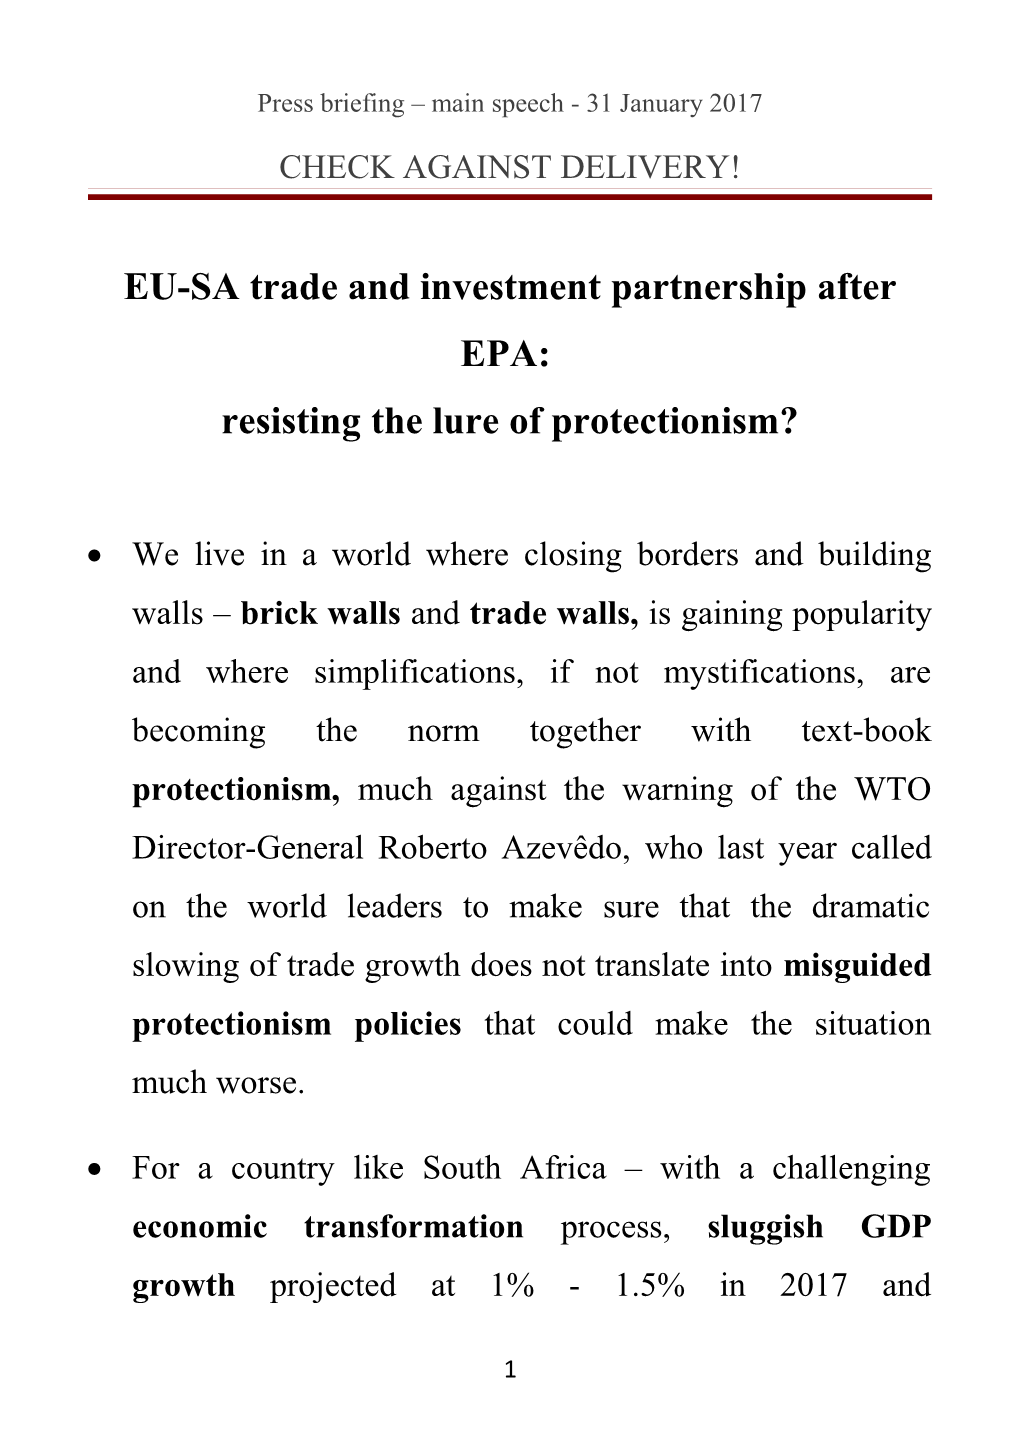 EU-SA Trade and Investment Partnership After EPA